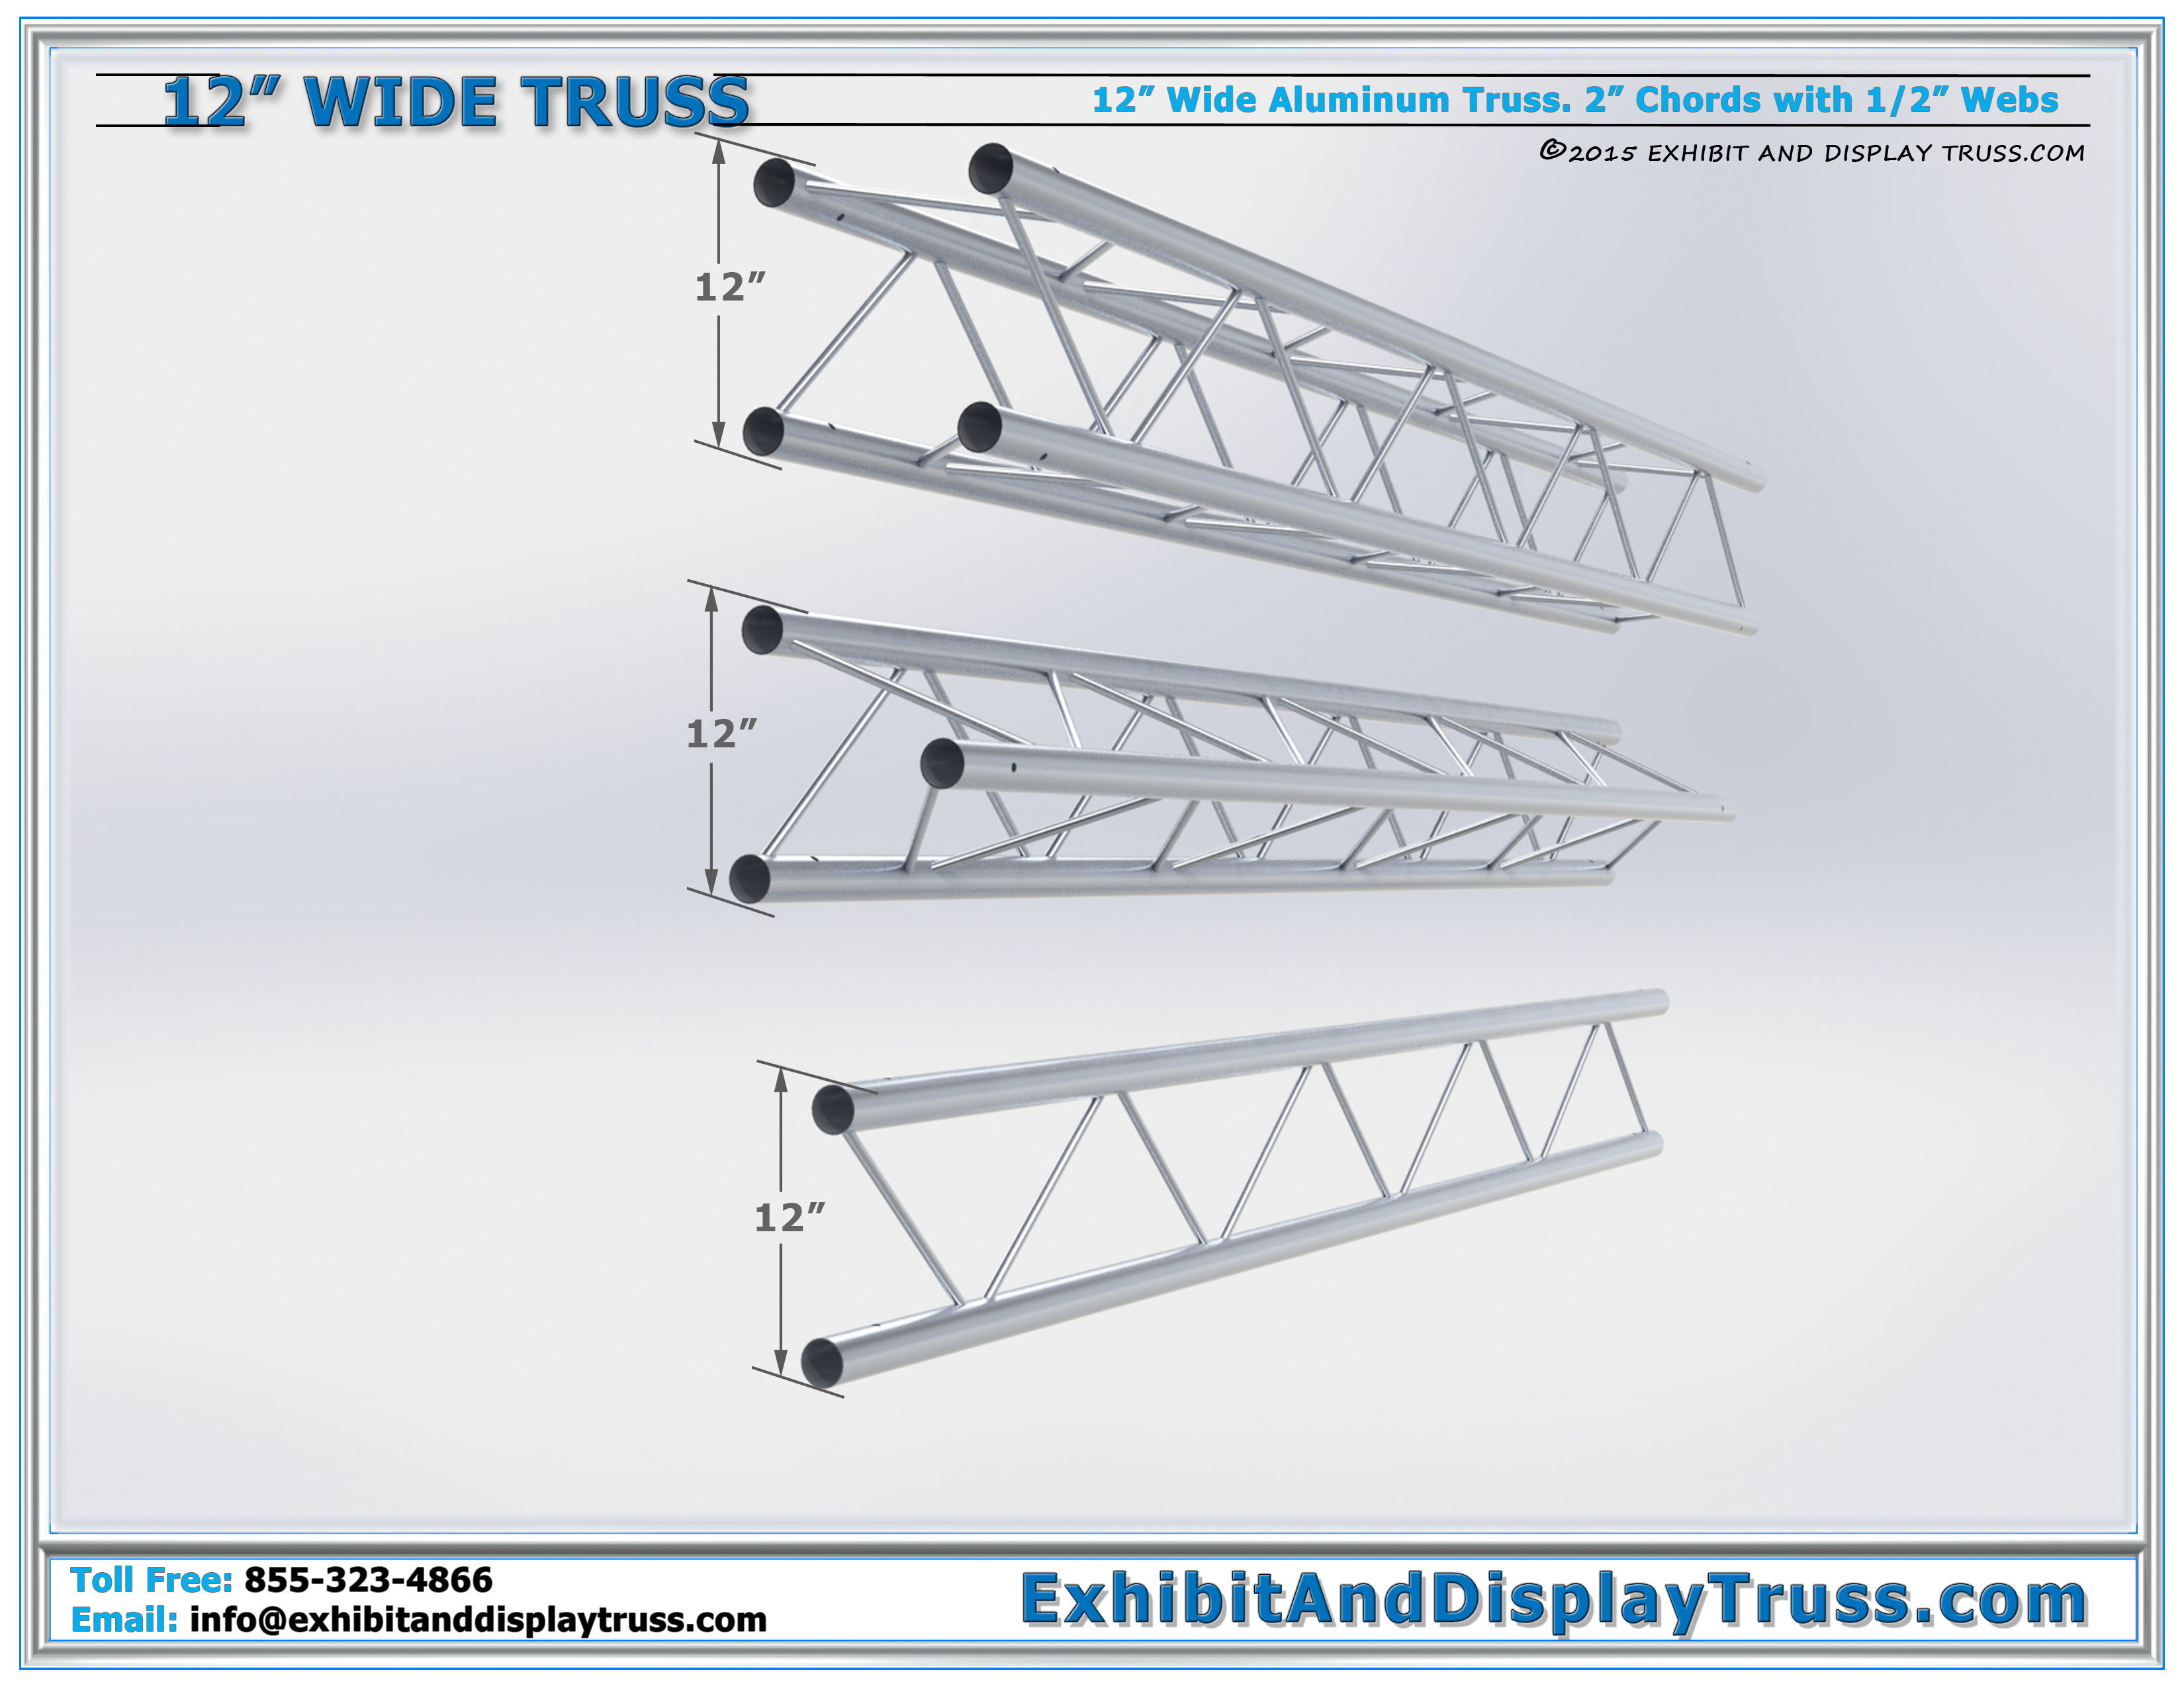 12” Wide Aluminum Truss| Aluminum Exhibit Truss Stocked In: Box / Square, Triangle and Flat / Ladder